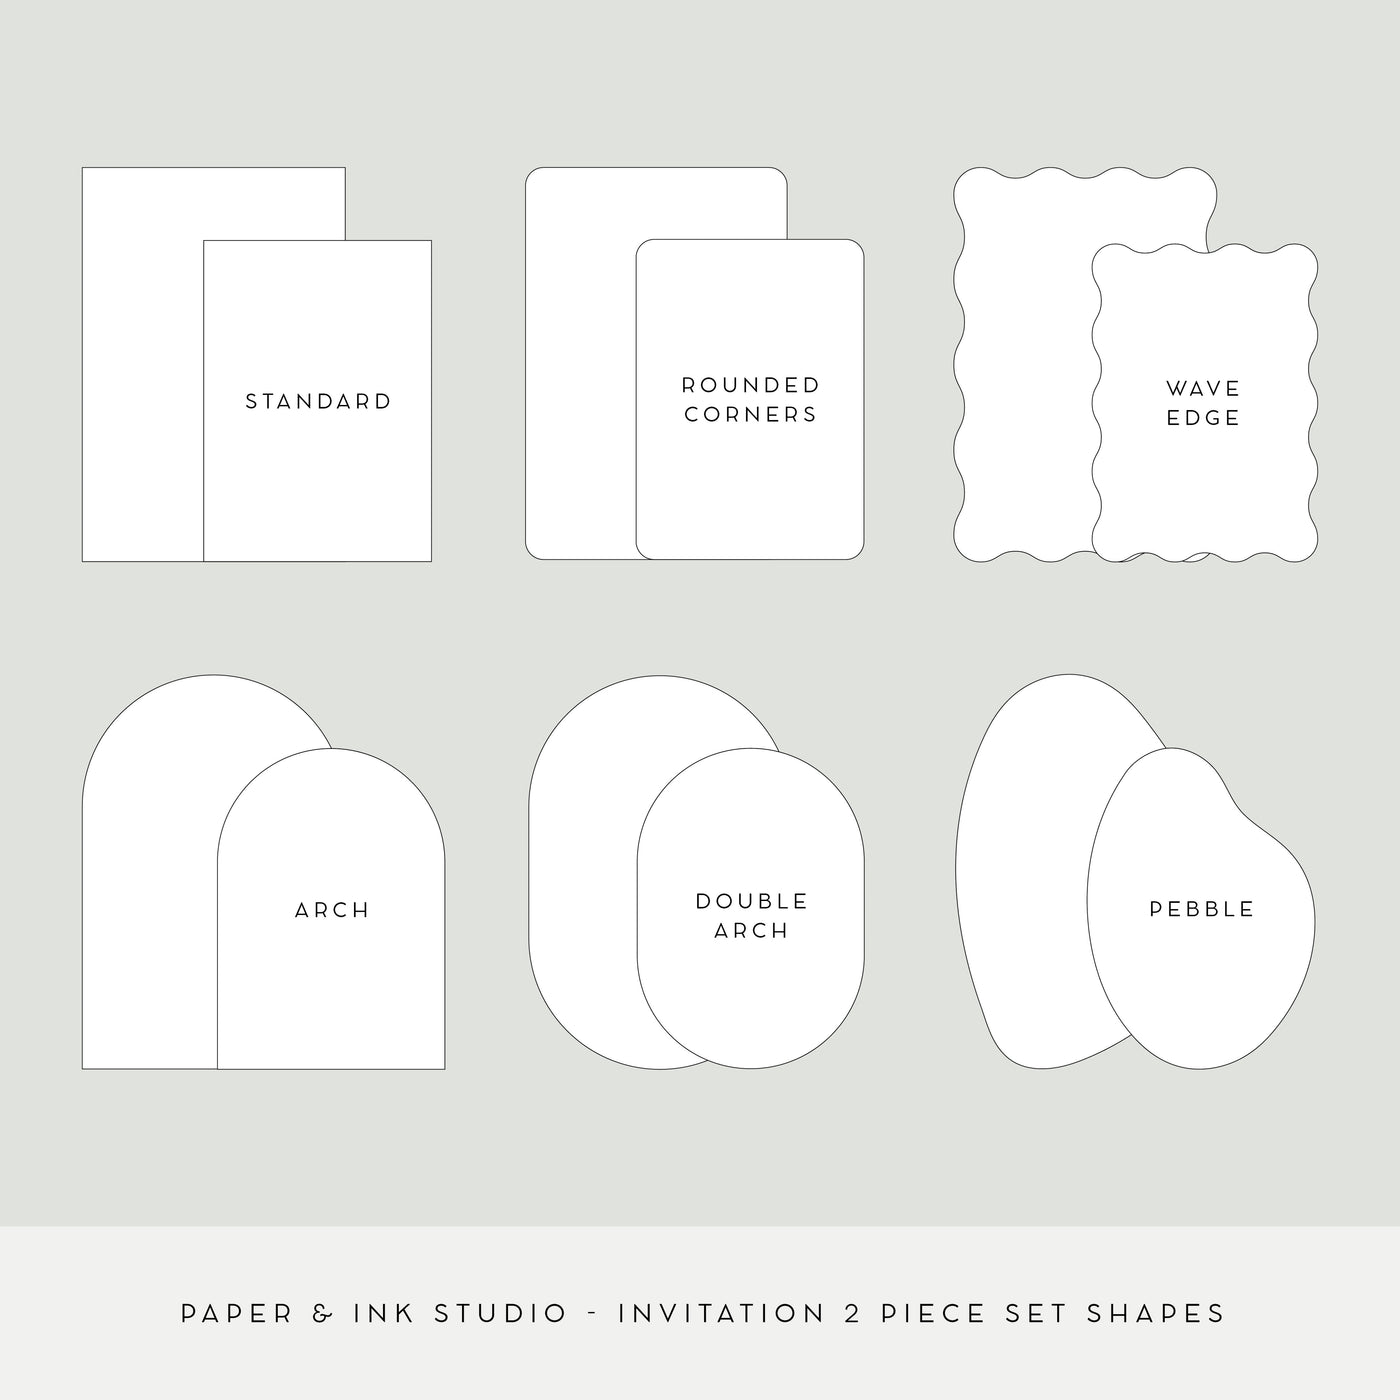 Waverly - Wedding Invitation & Information/Details Card Set